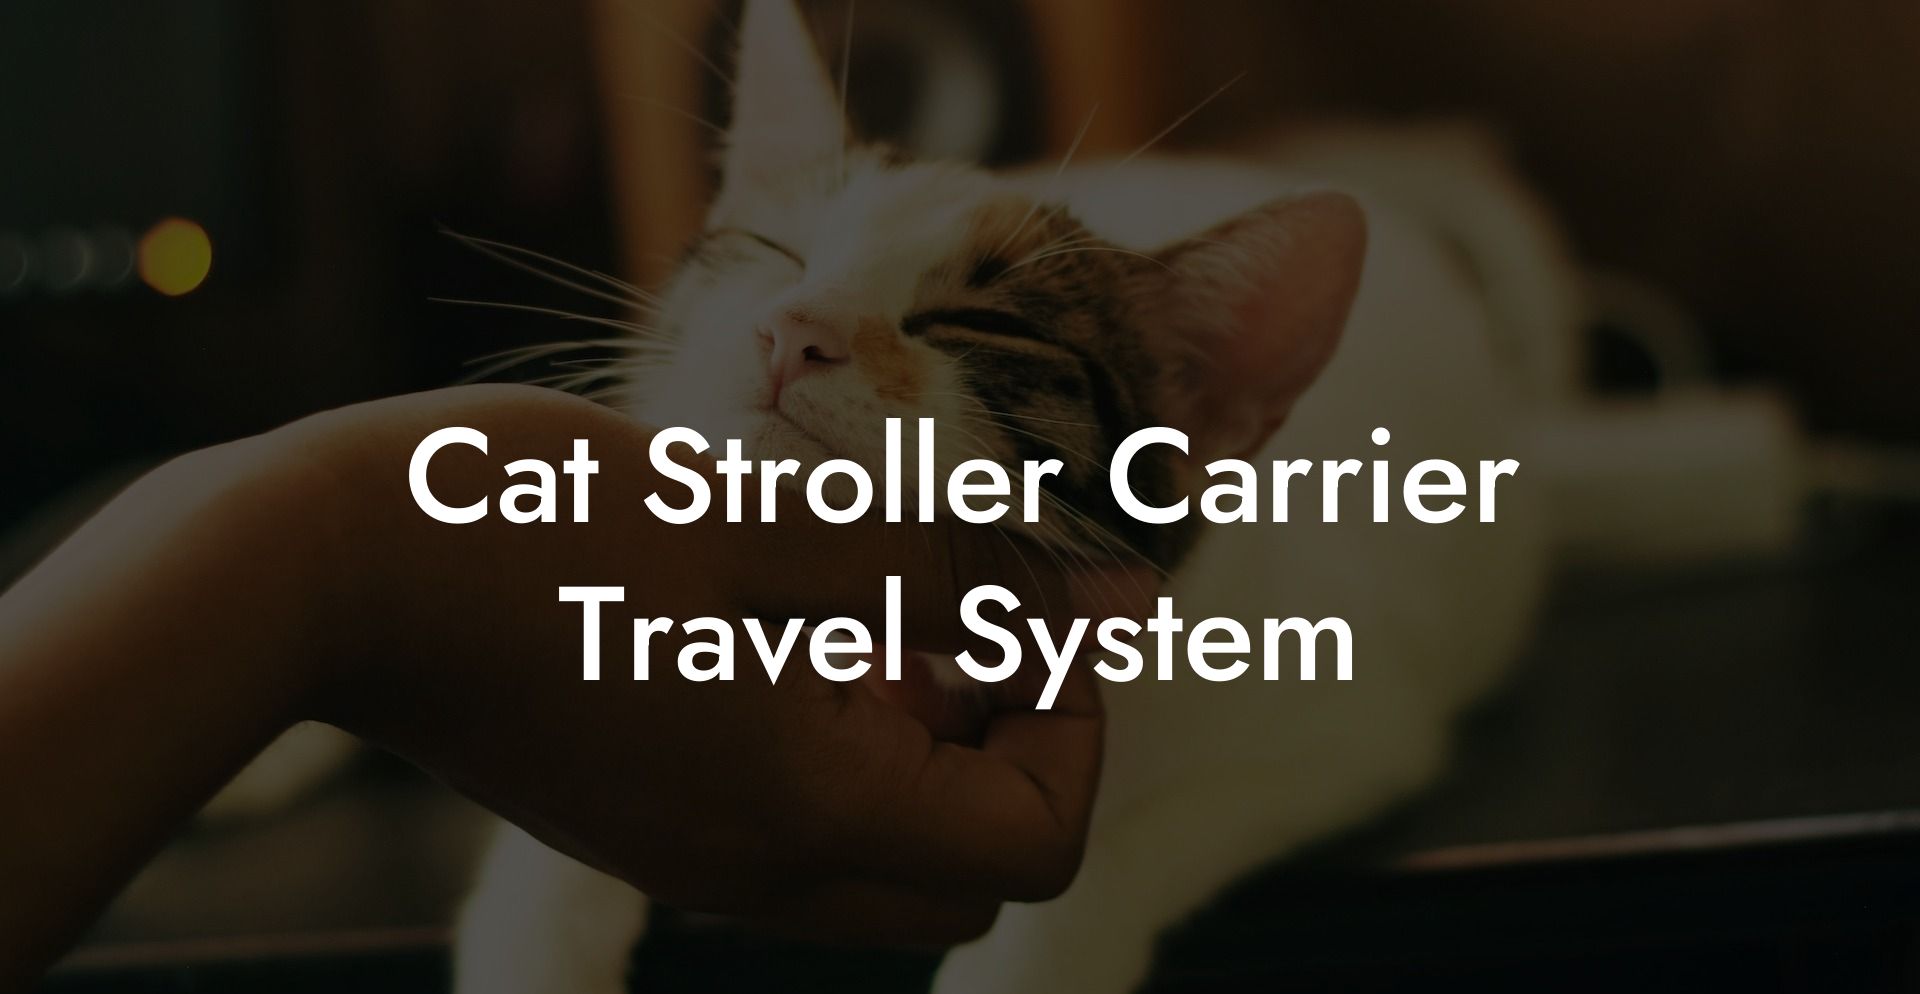 Cat Stroller Carrier Travel System